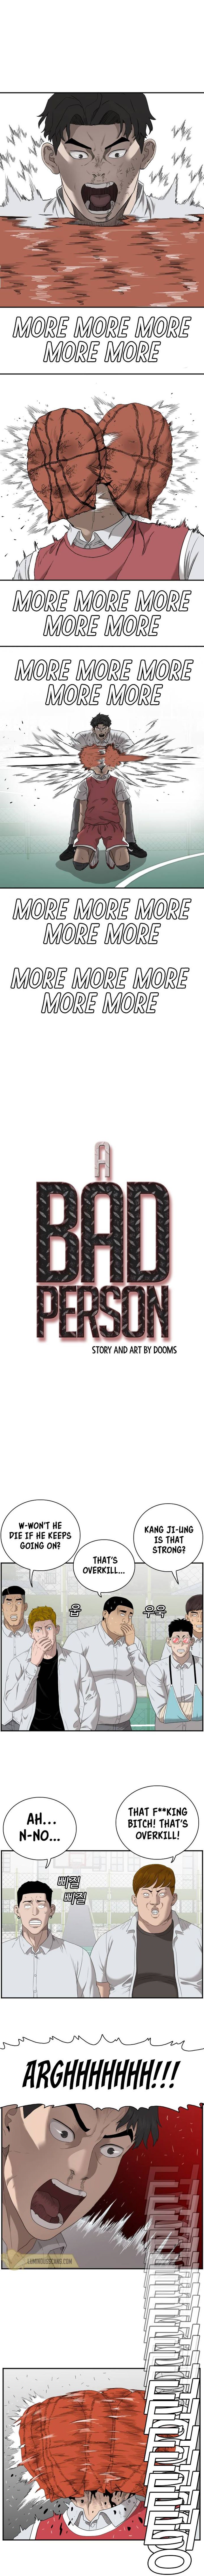 bad_boy_dooms_50_1